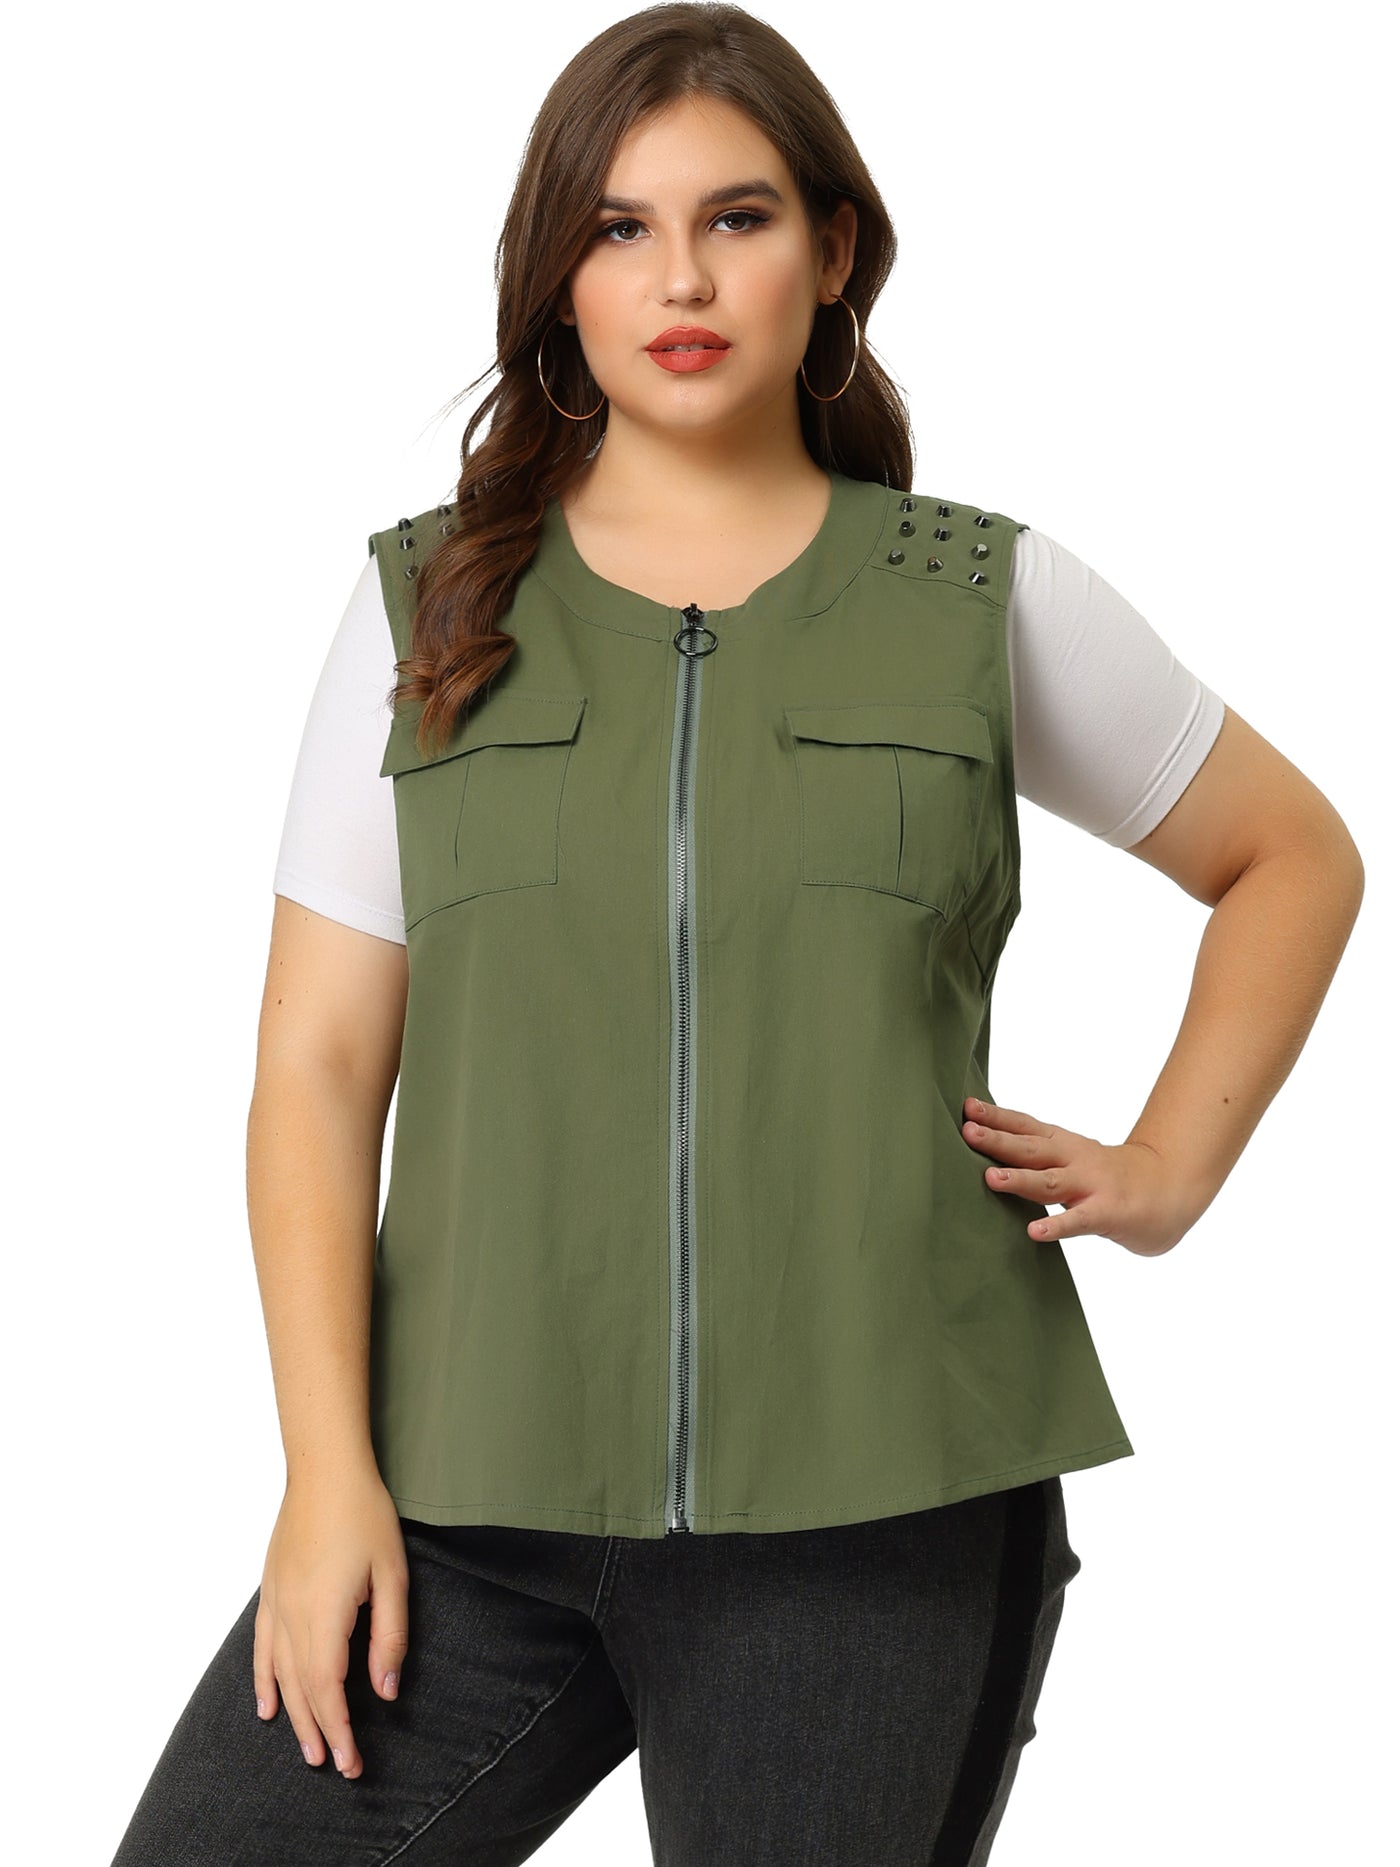 Bublédon Women's Plus Size Anorak Jacket Zip Up Lightweight Sleeveless Utility Vest